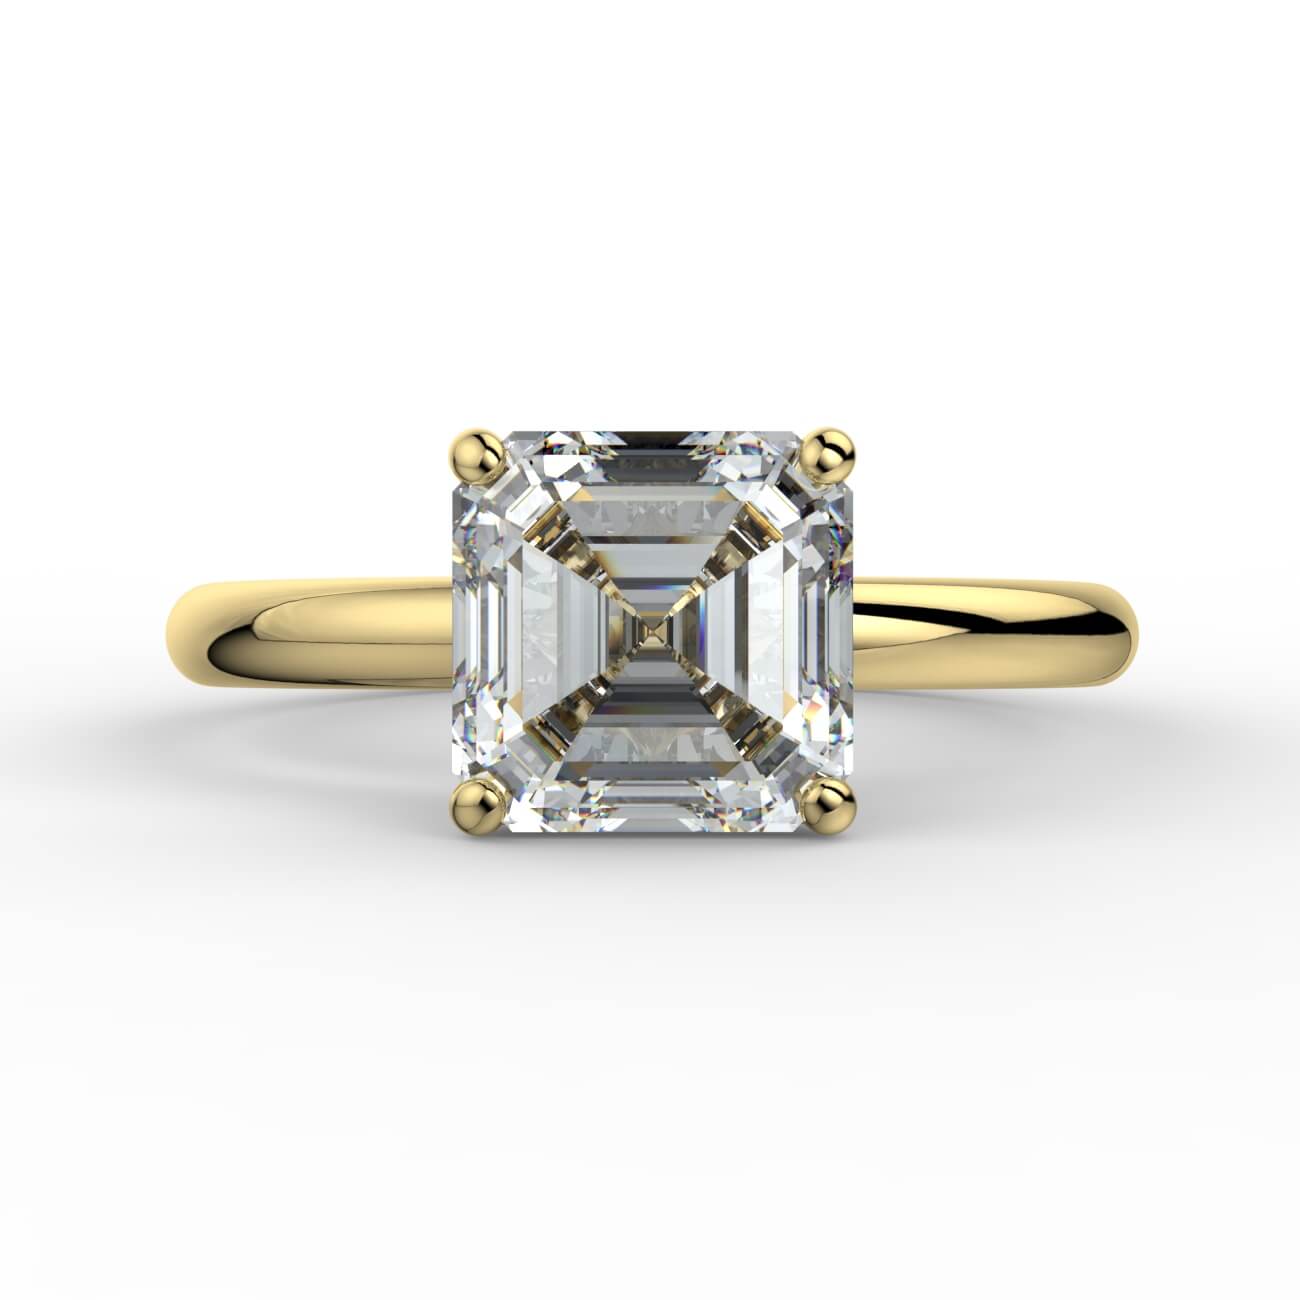 Comfort fit 4 claw asscher cut solitaire diamond ring in yellow gold – Australian Diamond Network